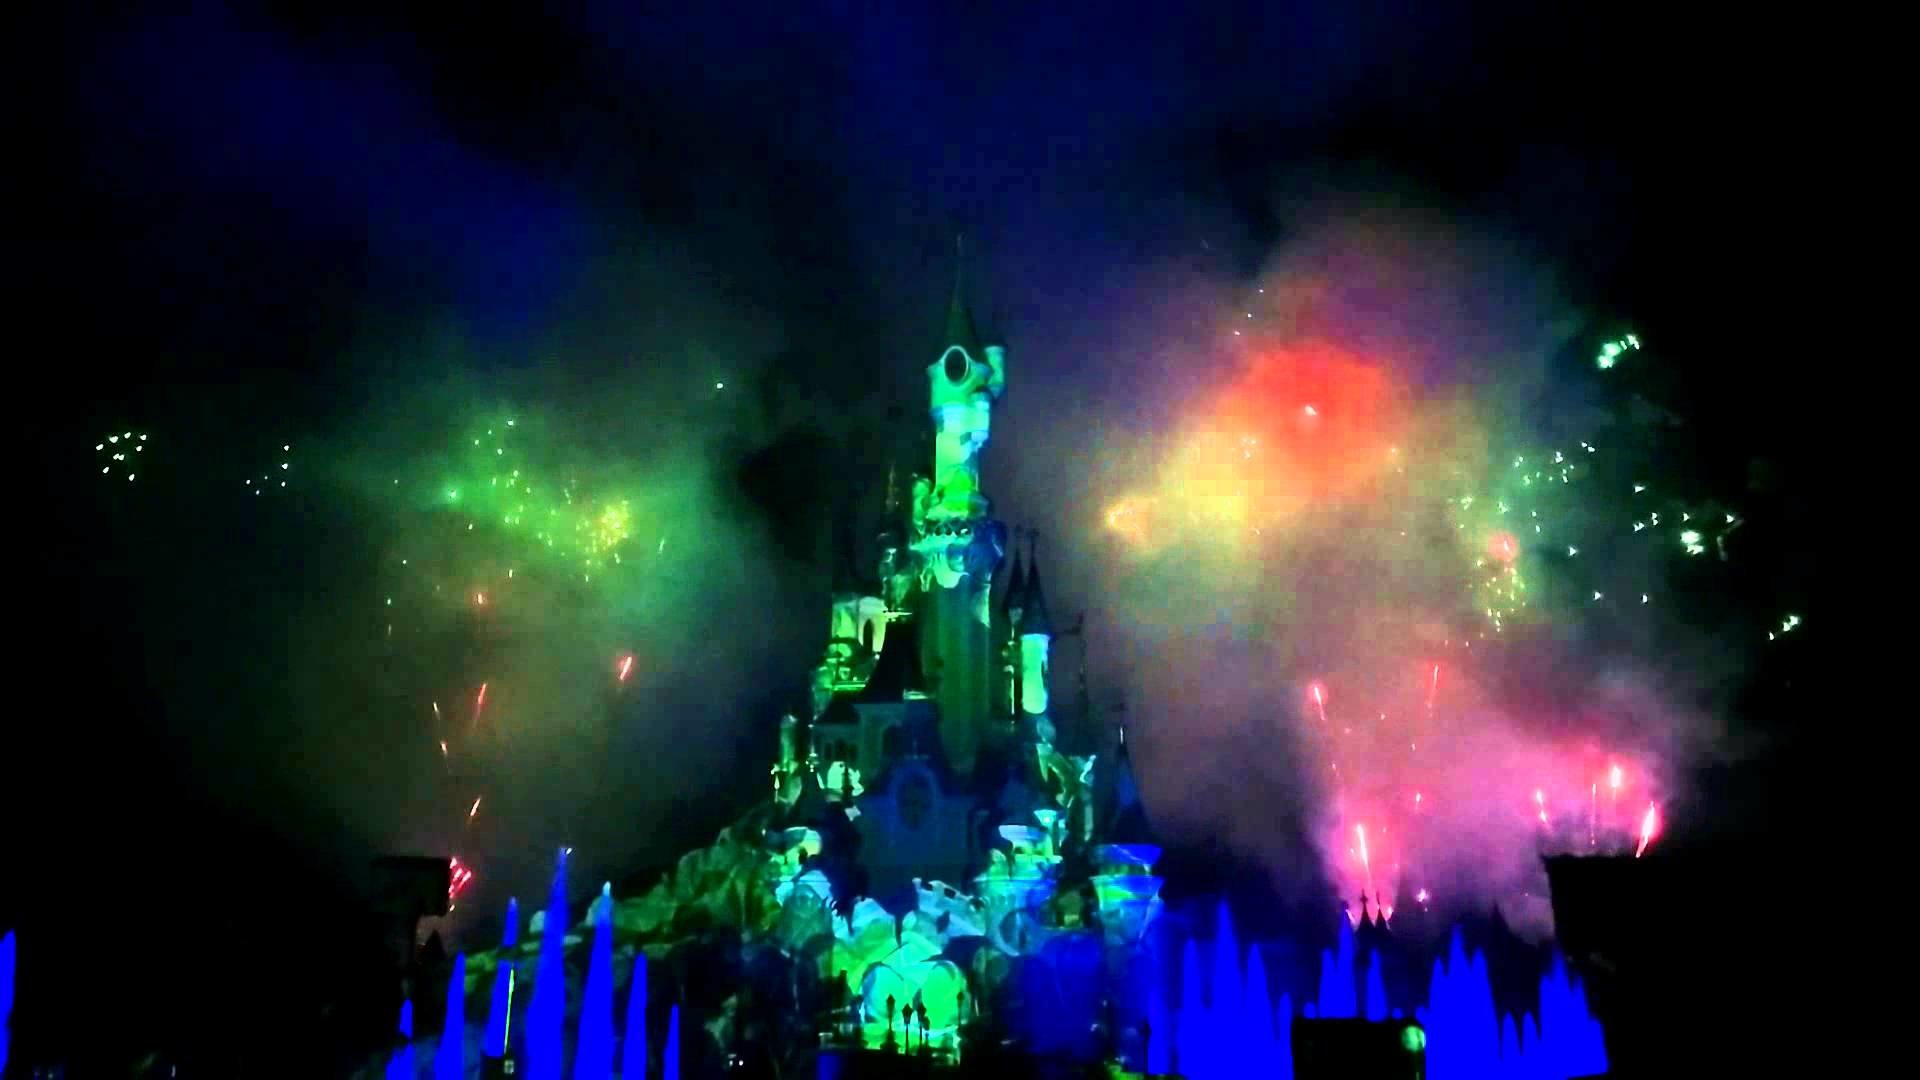 1920x1080 St. Patrick's Day Fireworks 2014 - Disneyland Paris